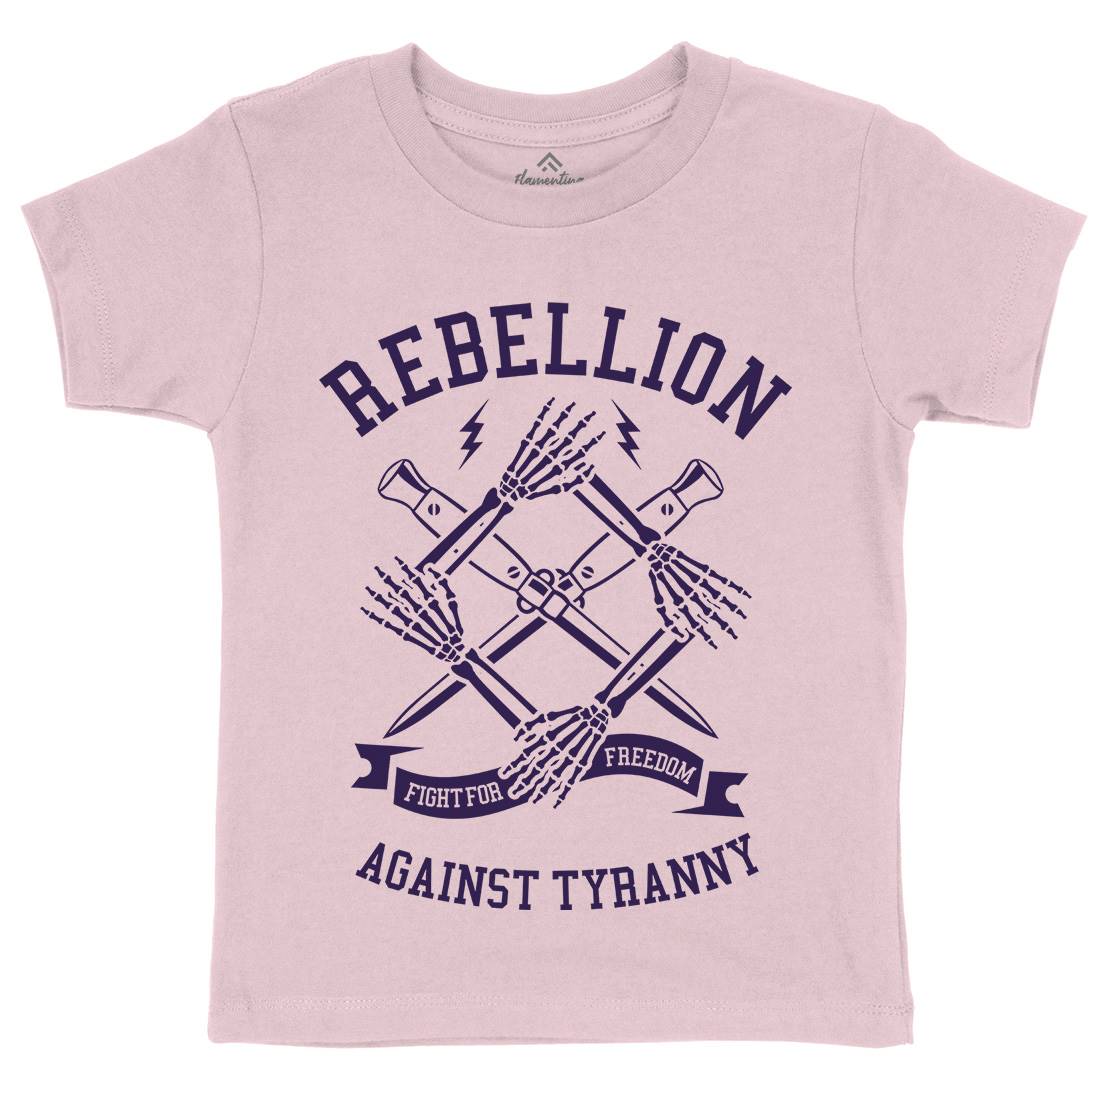 Rebellion Kids Crew Neck T-Shirt Illuminati A266